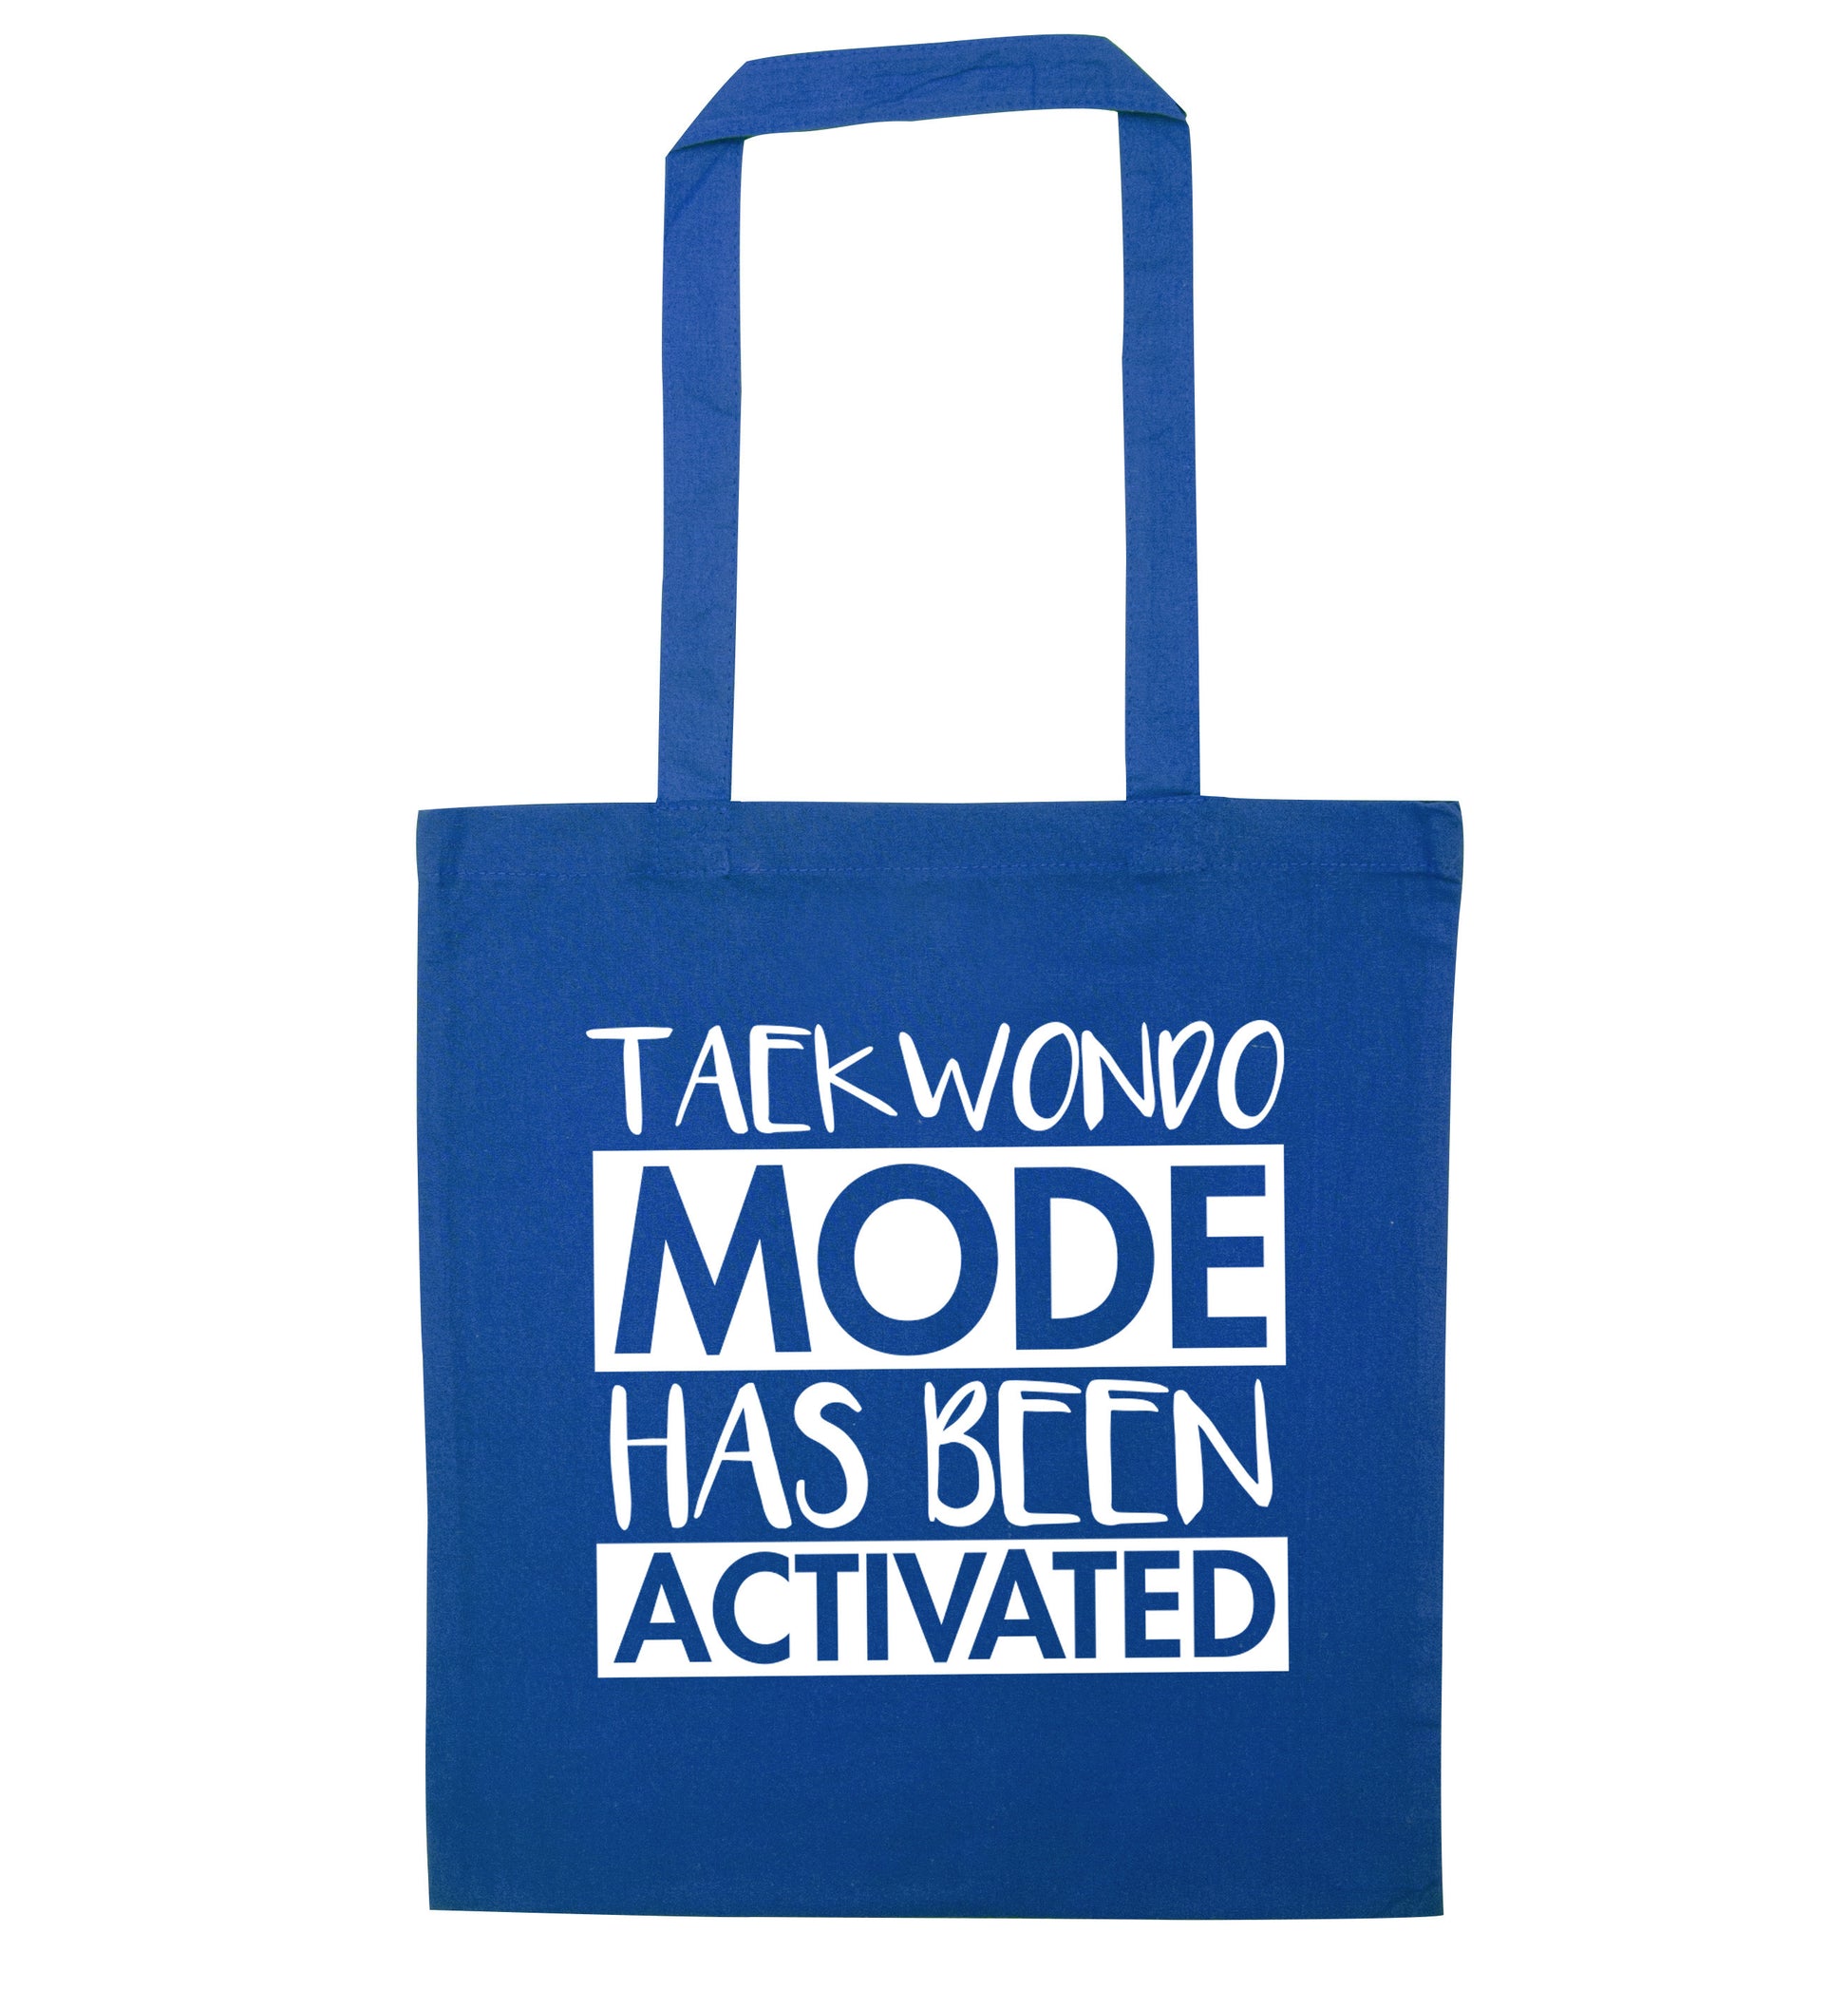 Taekwondo mode activated blue tote bag